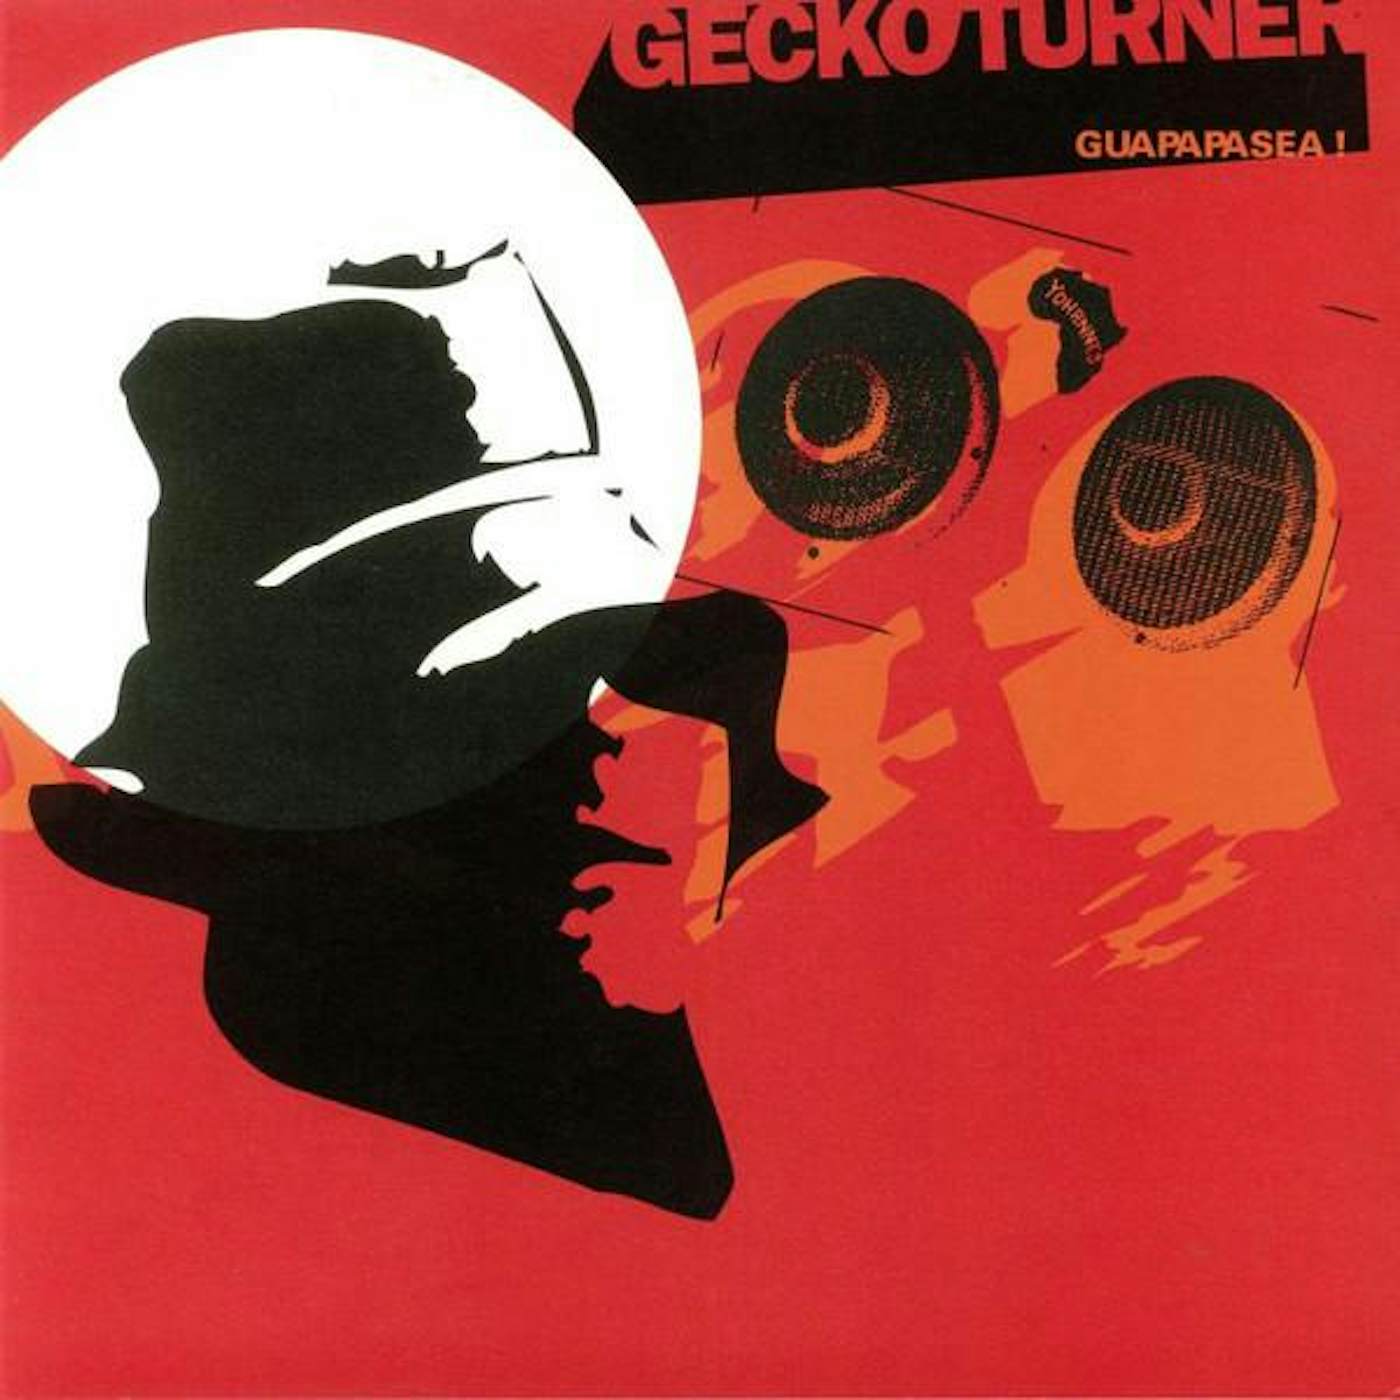 Gecko Turner GUAPAPASEA! Vinyl Record